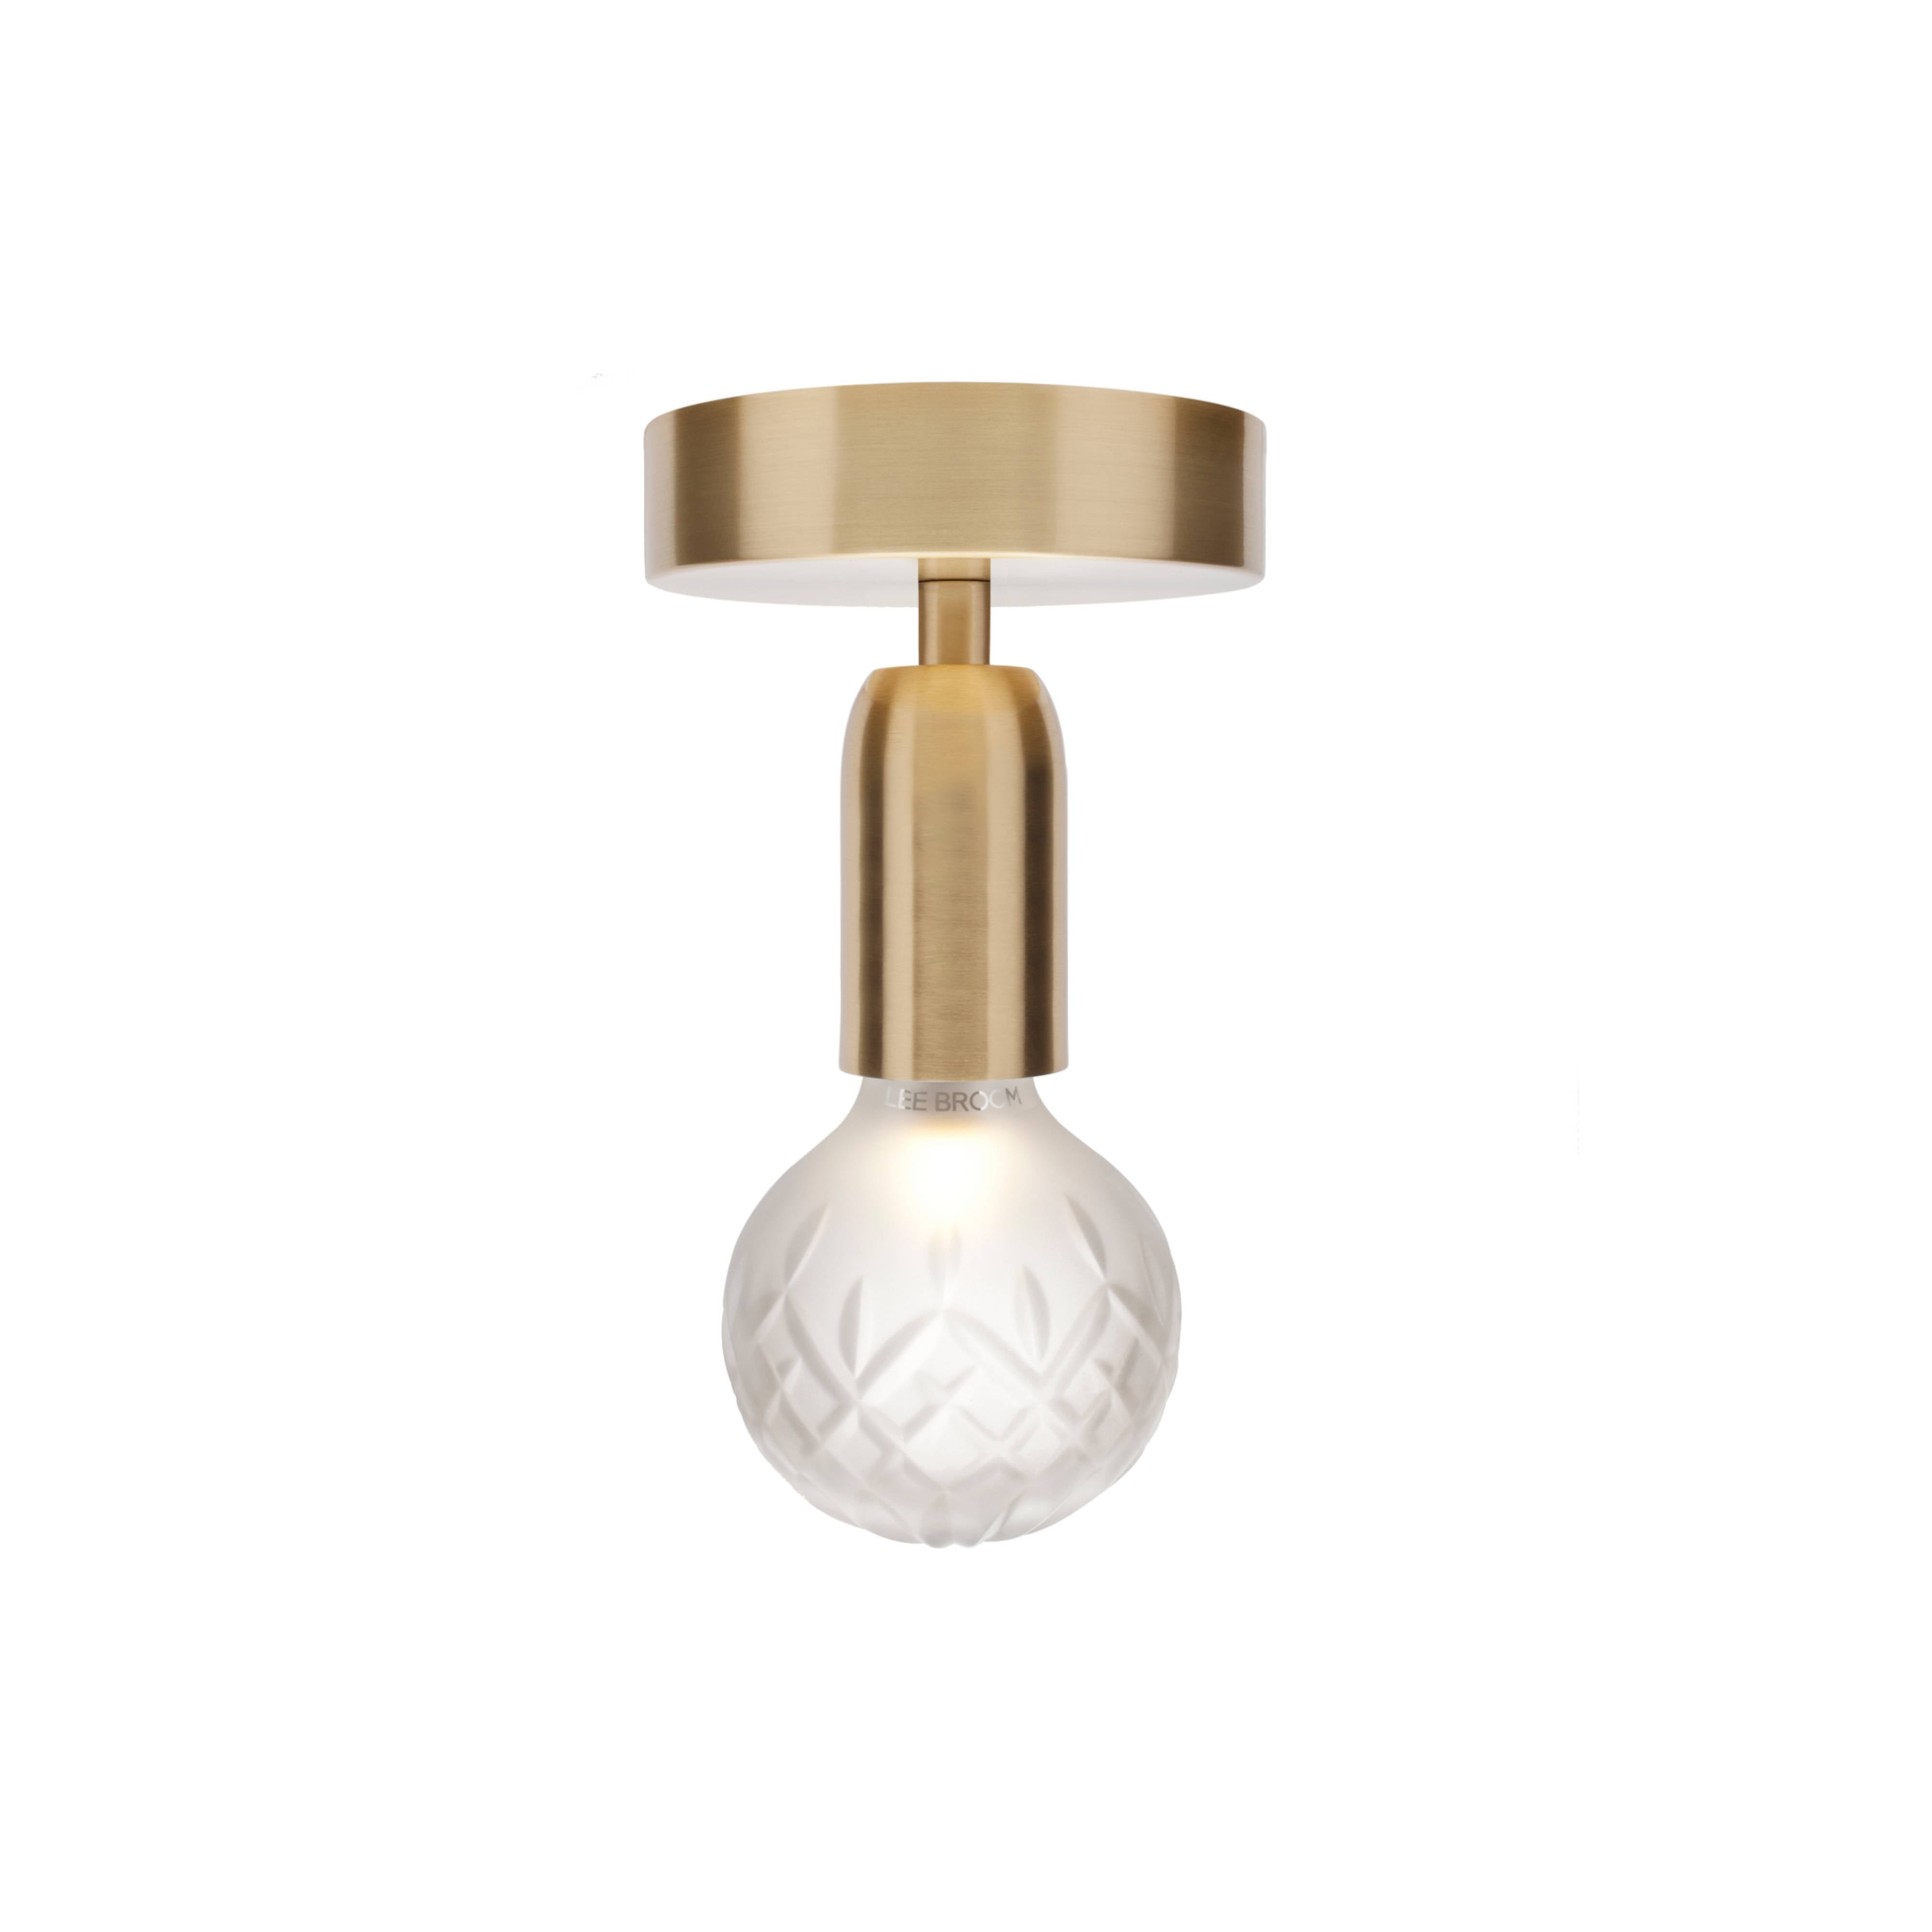 Crystal Bulb Ceiling Light: Forsted